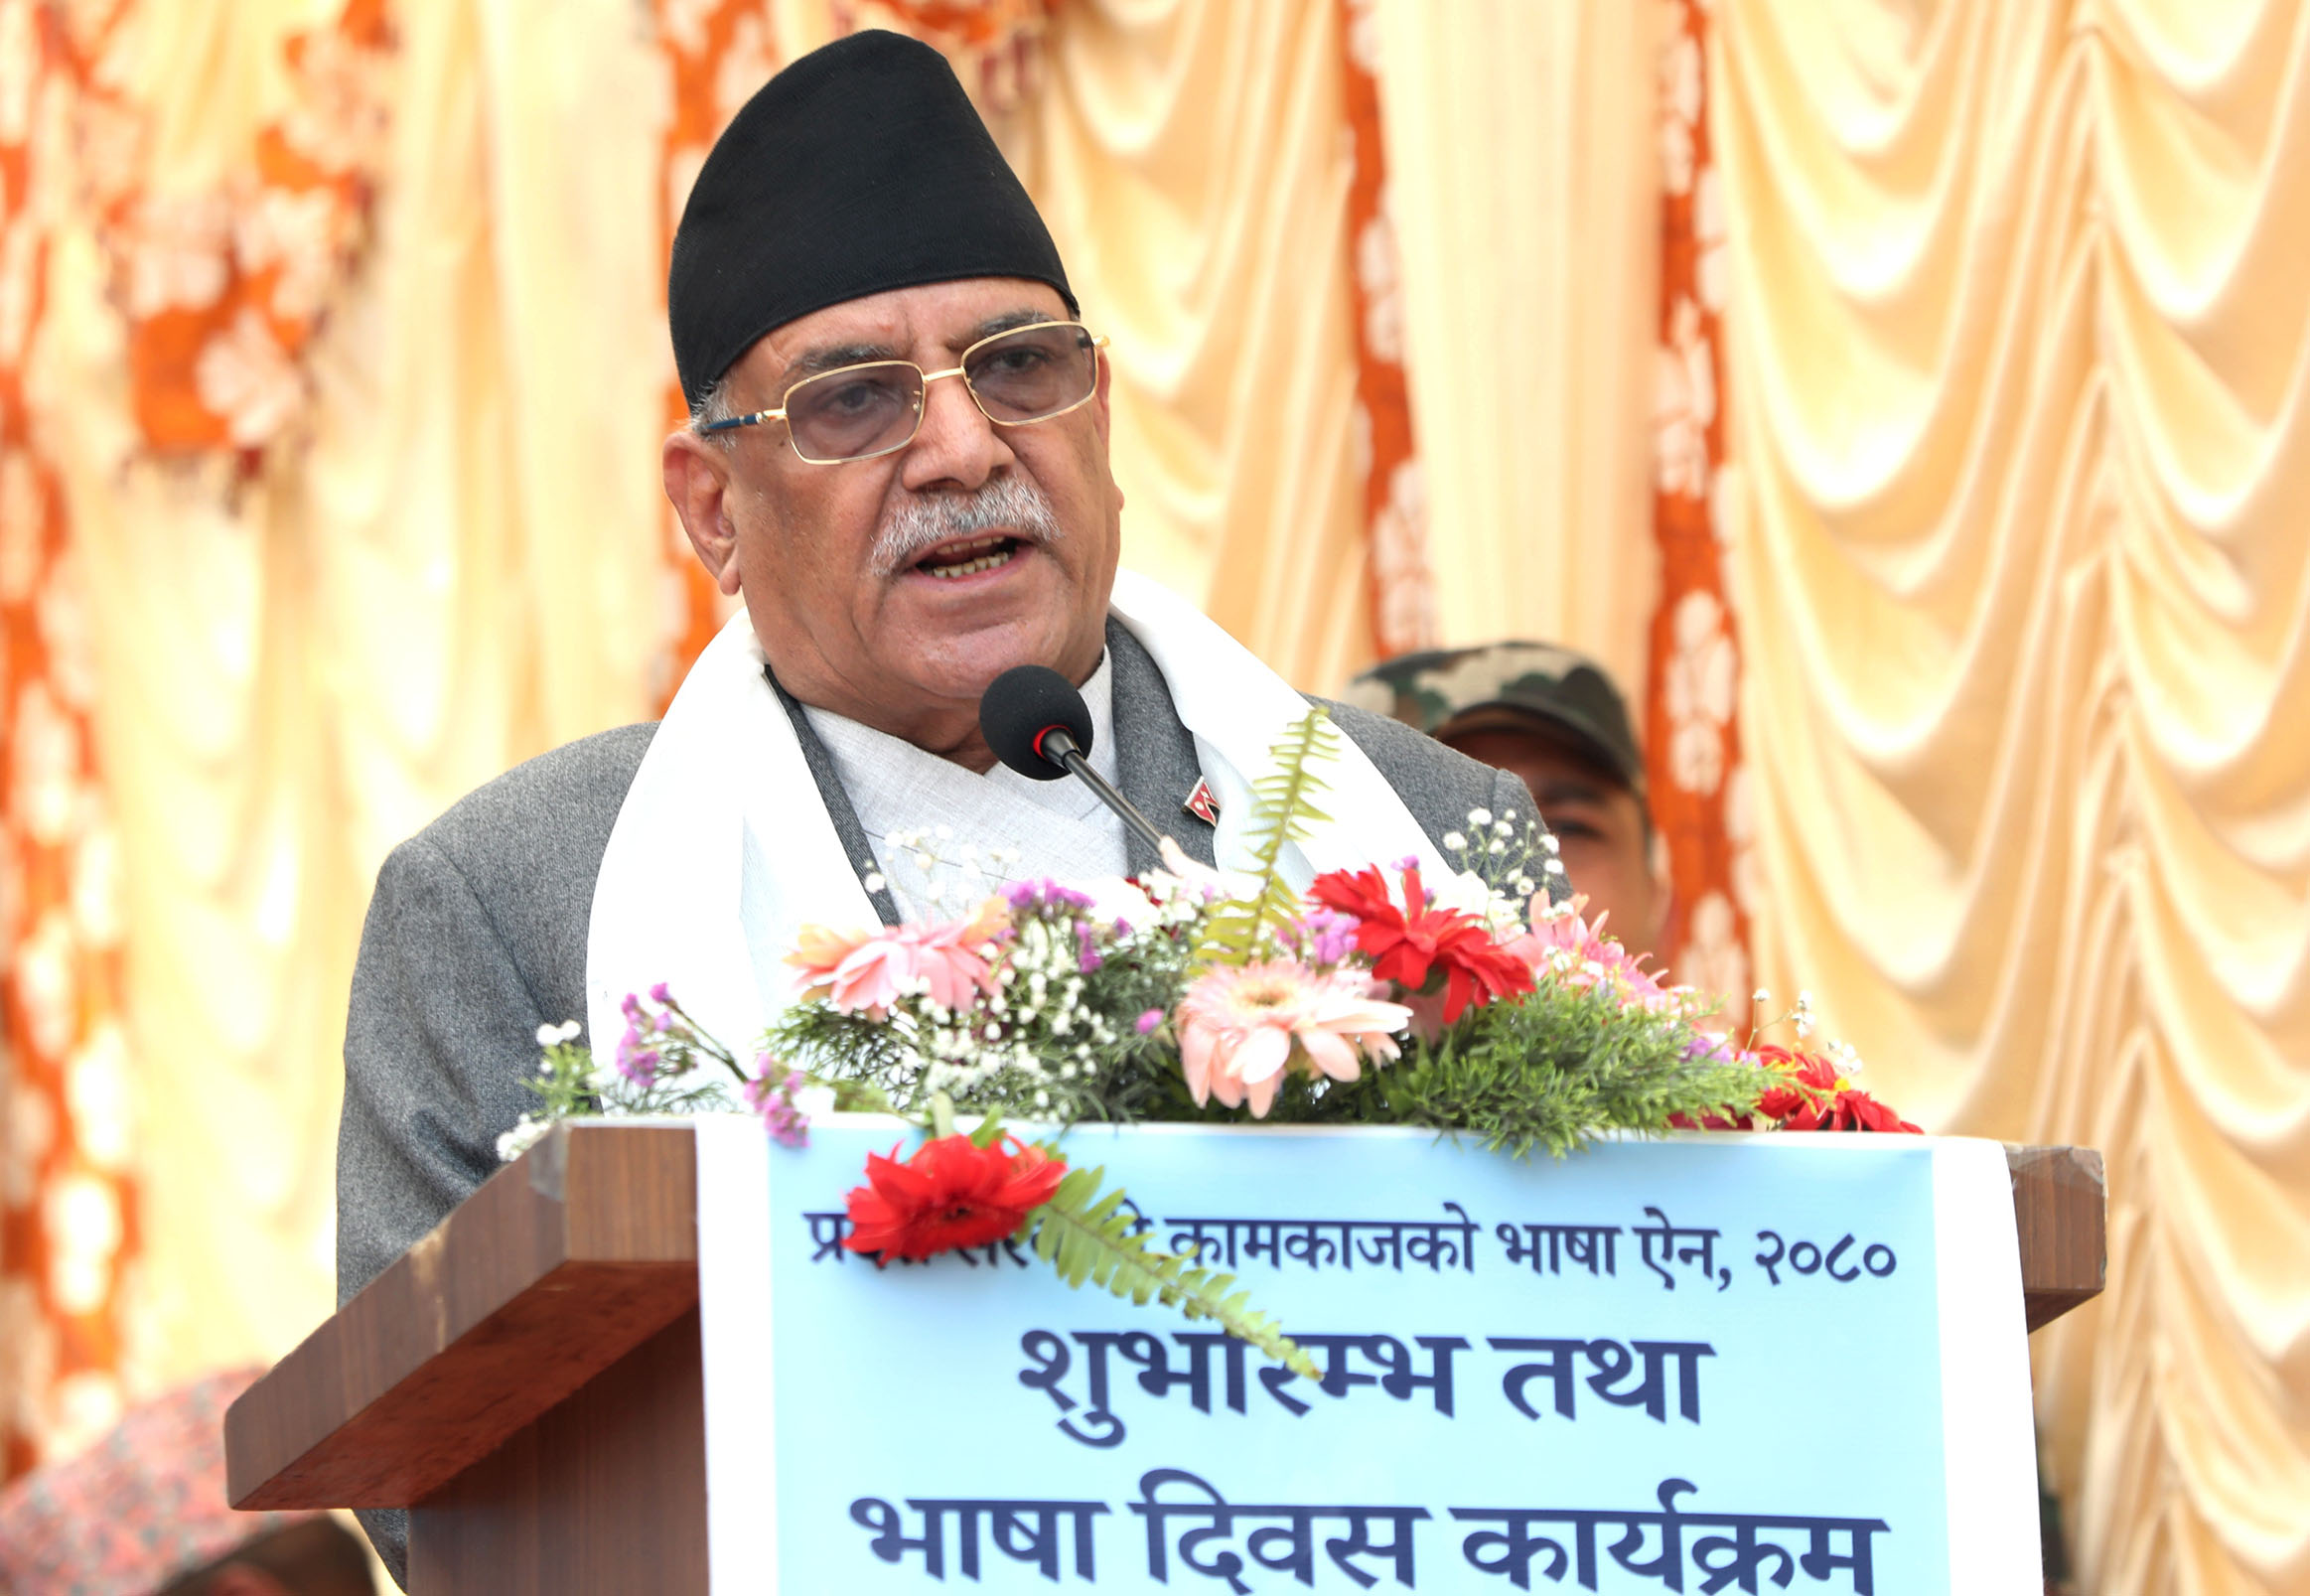 Newari and Tamang languages declared as official vernacular within Bagmati State